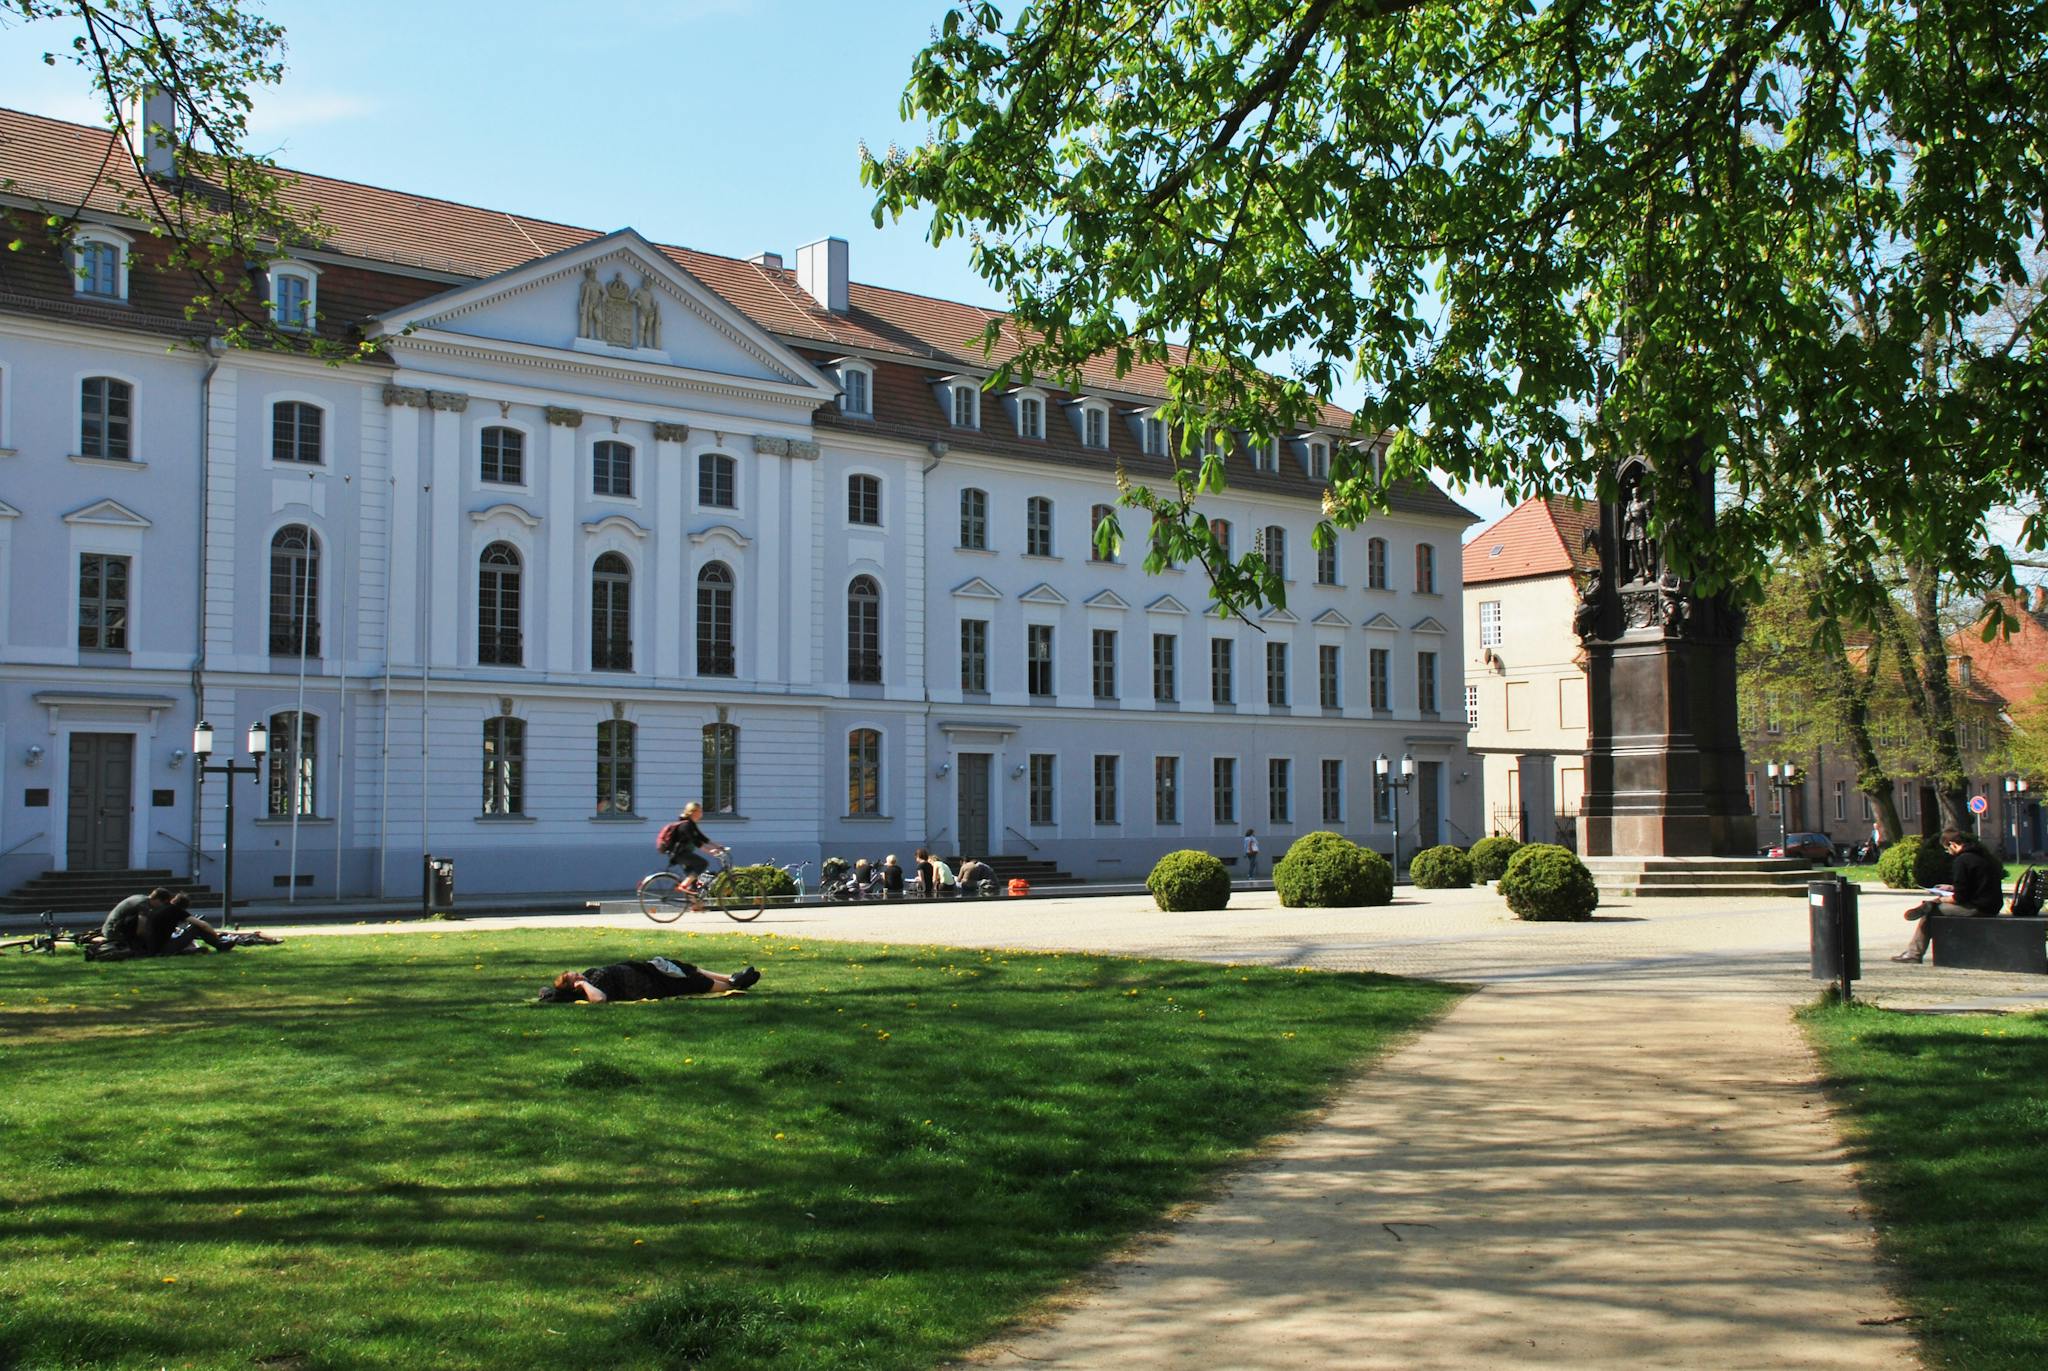 University of Greifswald